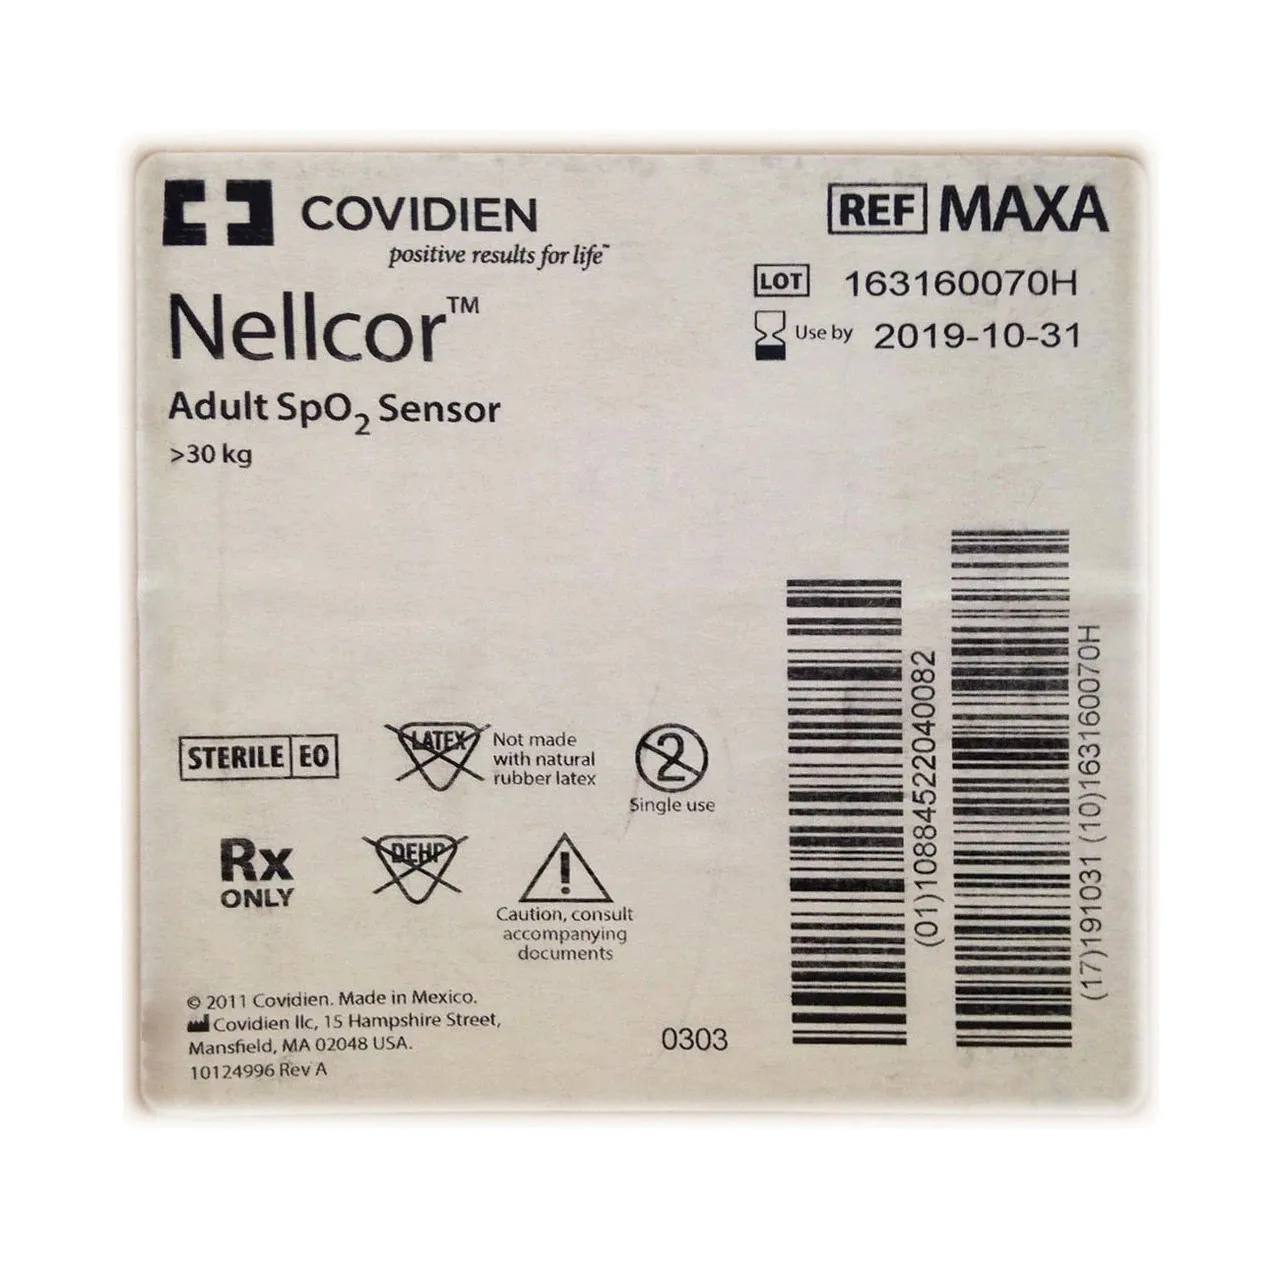 COVIDIEN - MAXA - Covidien Nellcor Adult Spo2 Sensor, >30kg